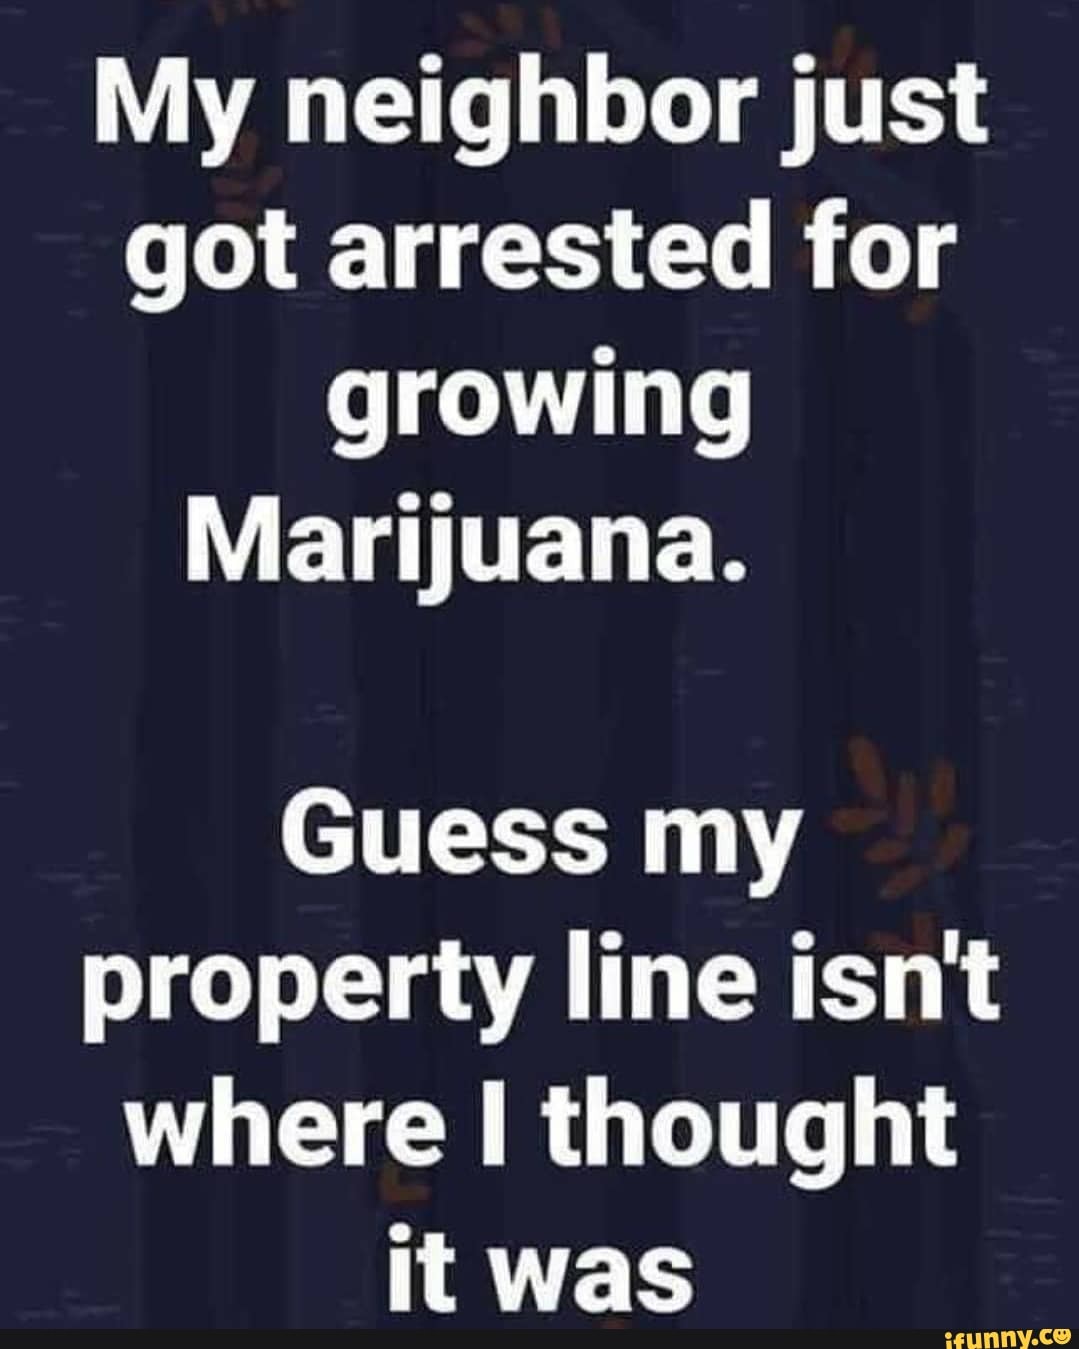 My neighbor just got arrested for growing Marijuana. Guess